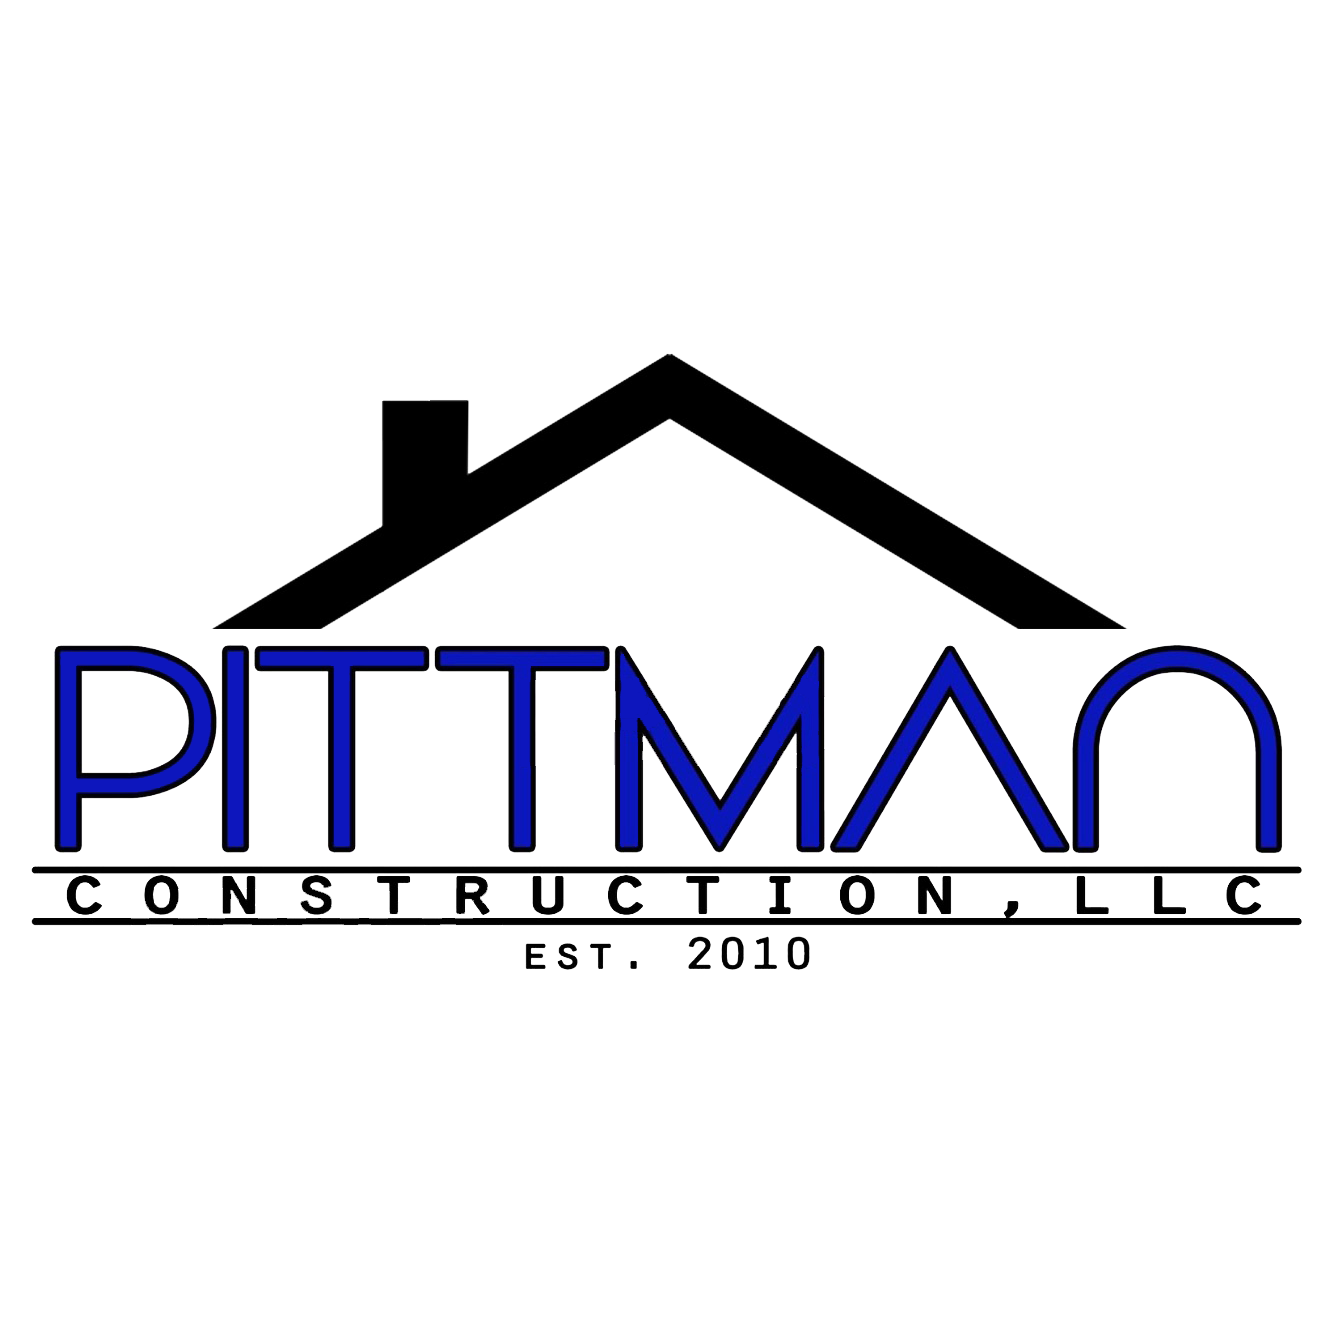 Pittman Construction Company